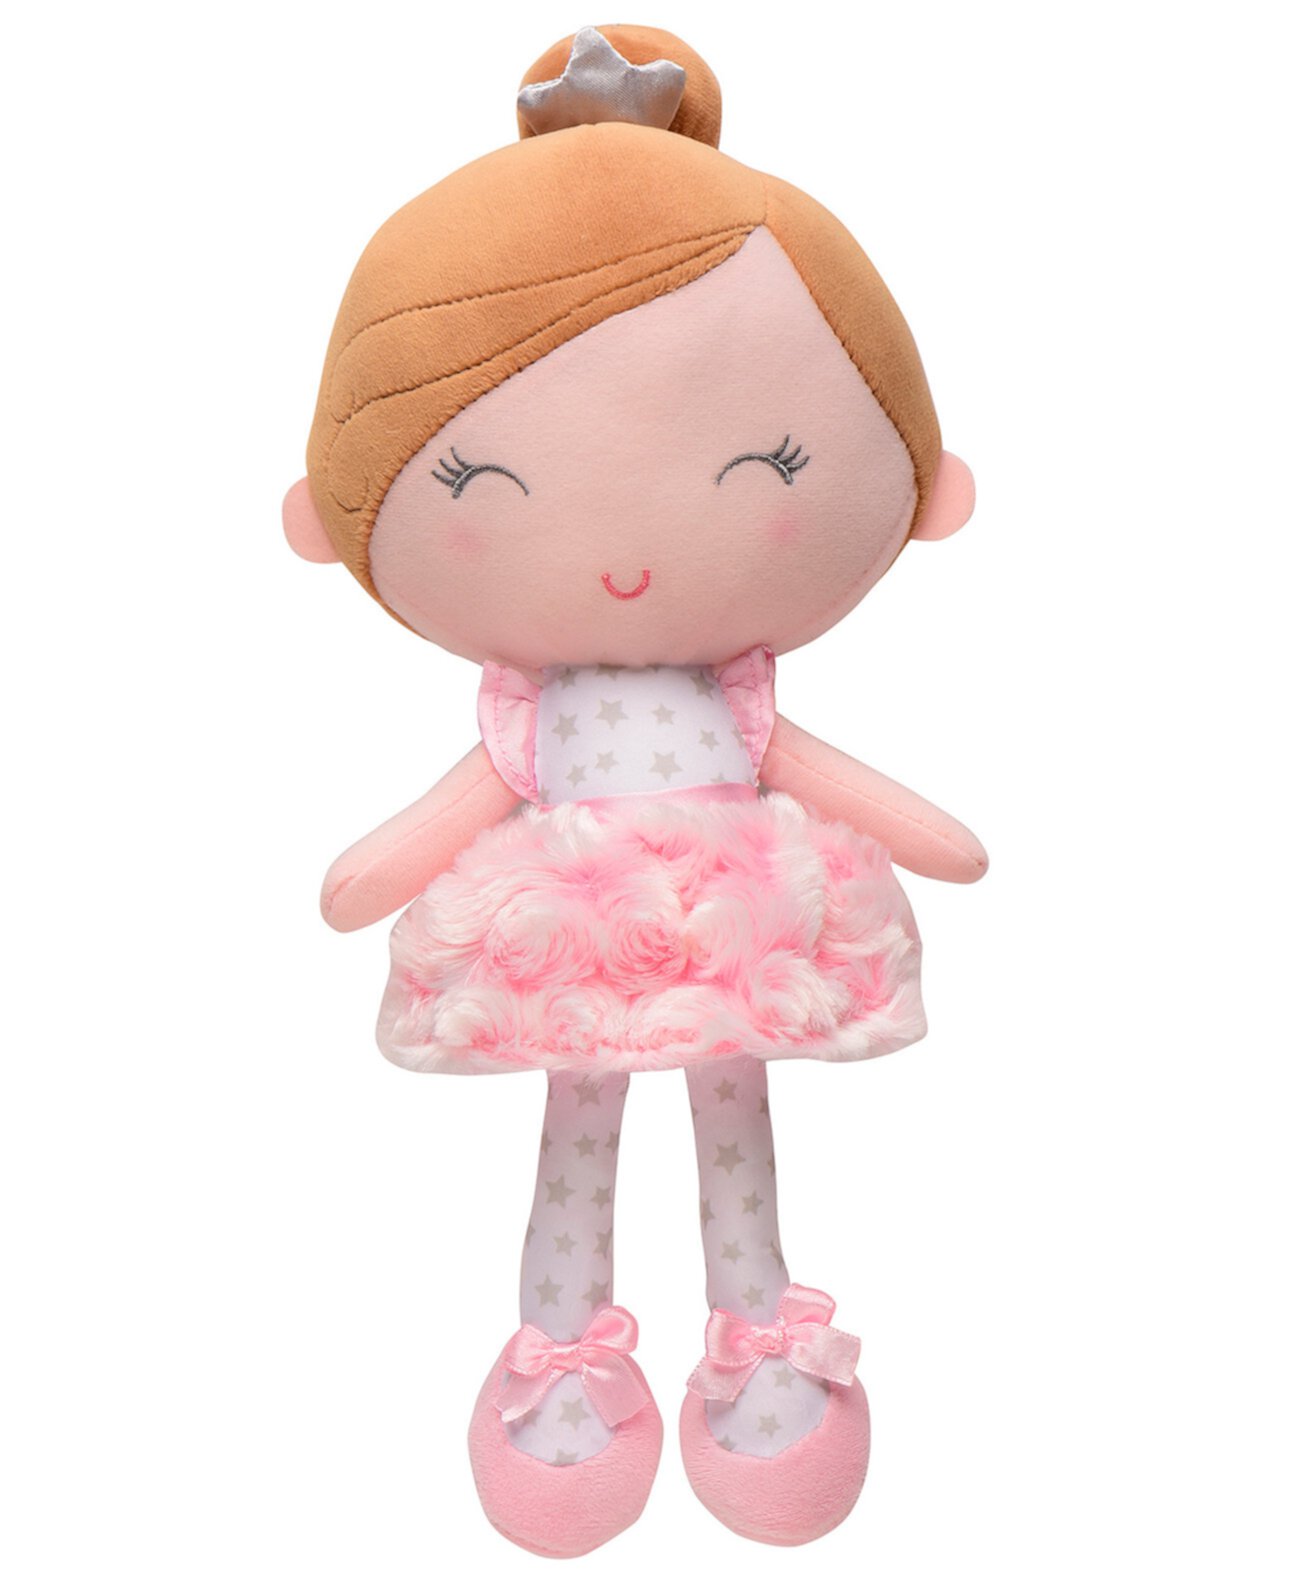 Плюшевая кукла Snuggle Buddy для девочек 11 дюймов, Annette Baby Starters